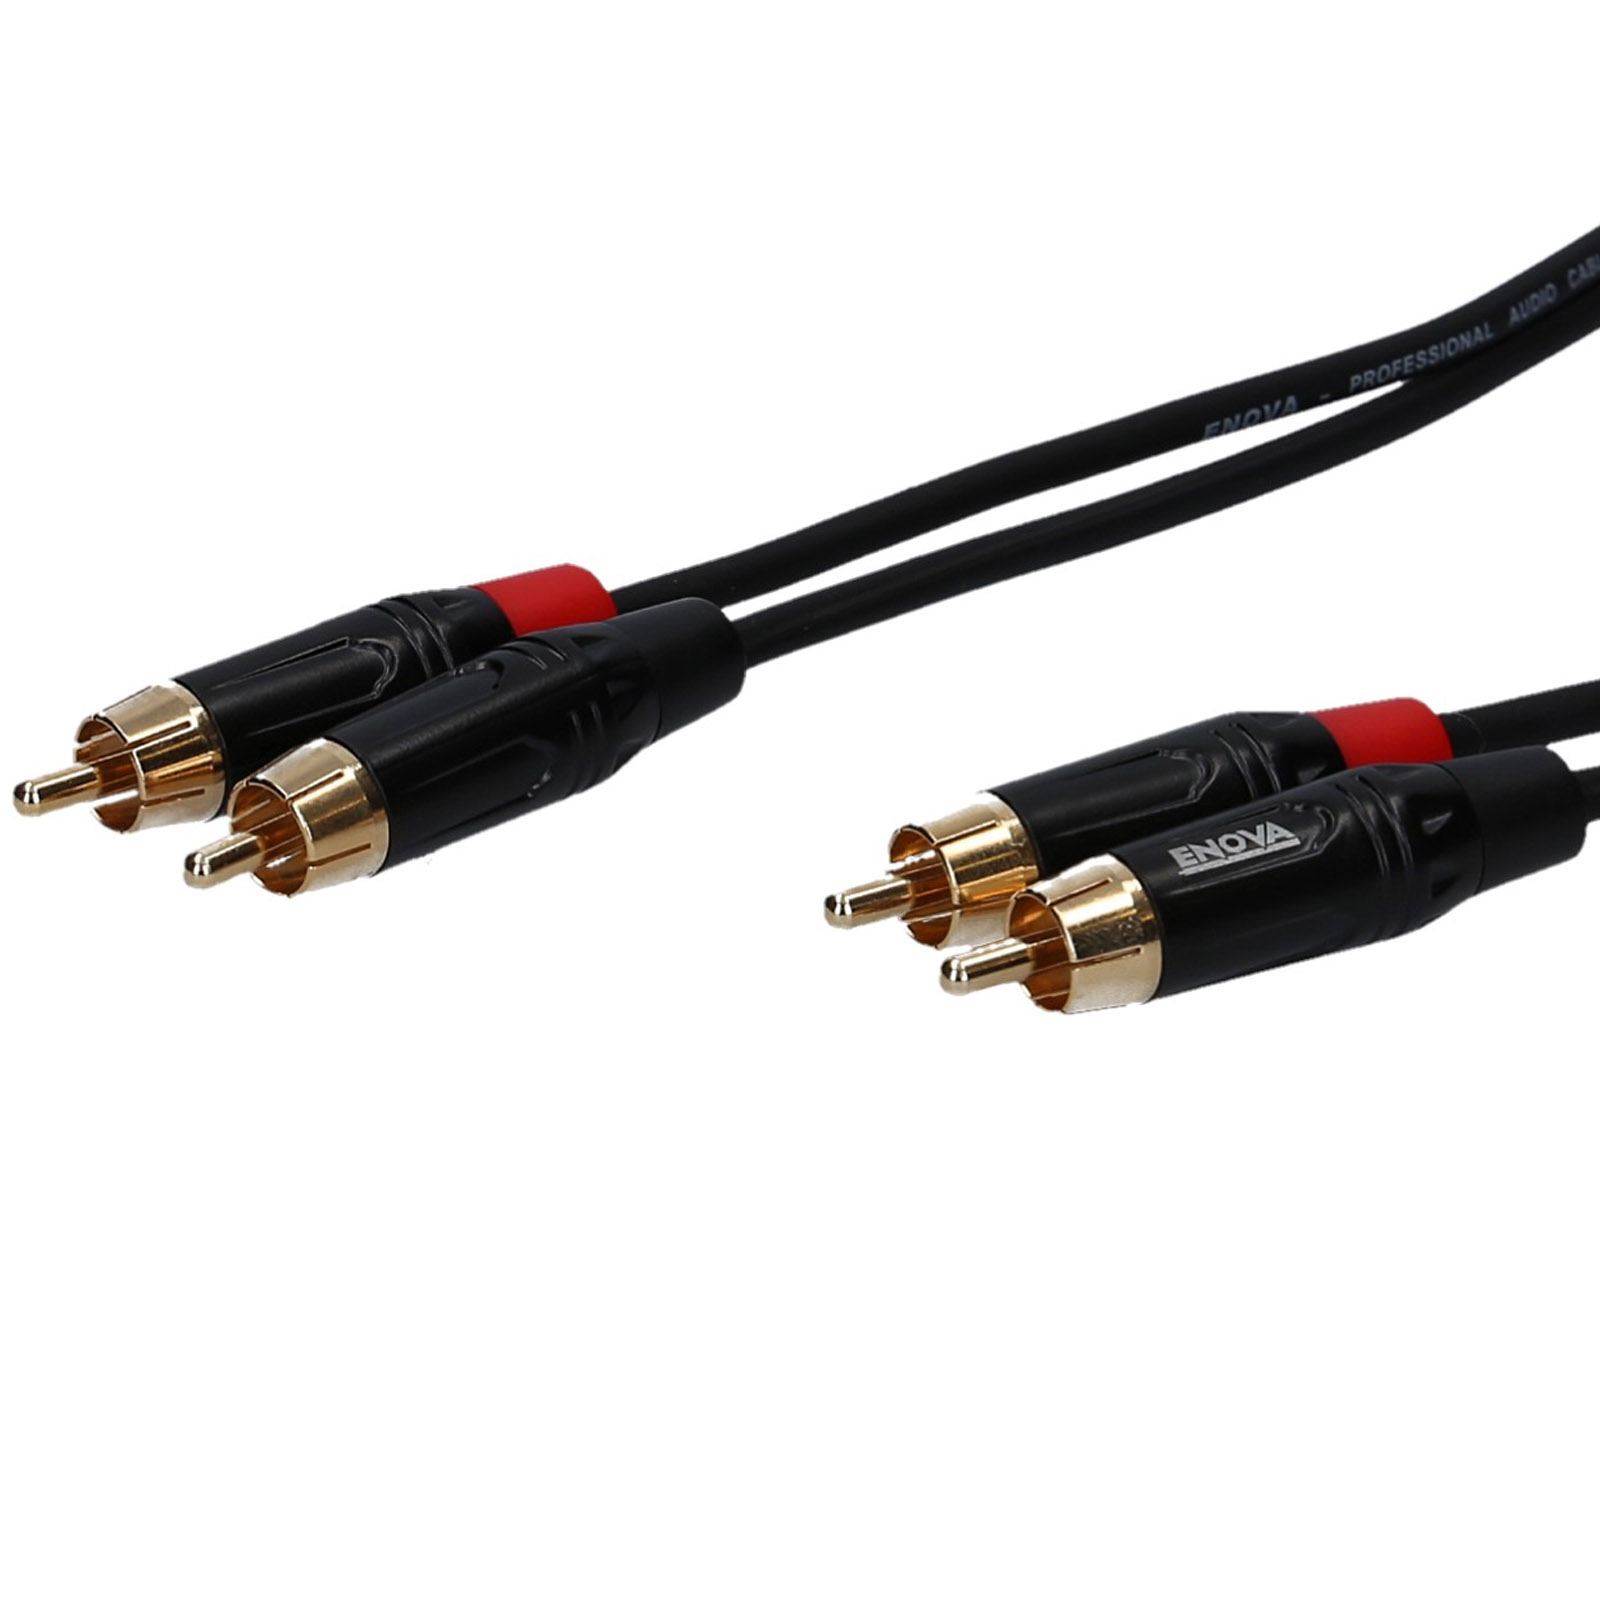 ENOVA 3 m & m schwarz Audio Cinch RCA Kabel male 3 rot Kabel, stereo